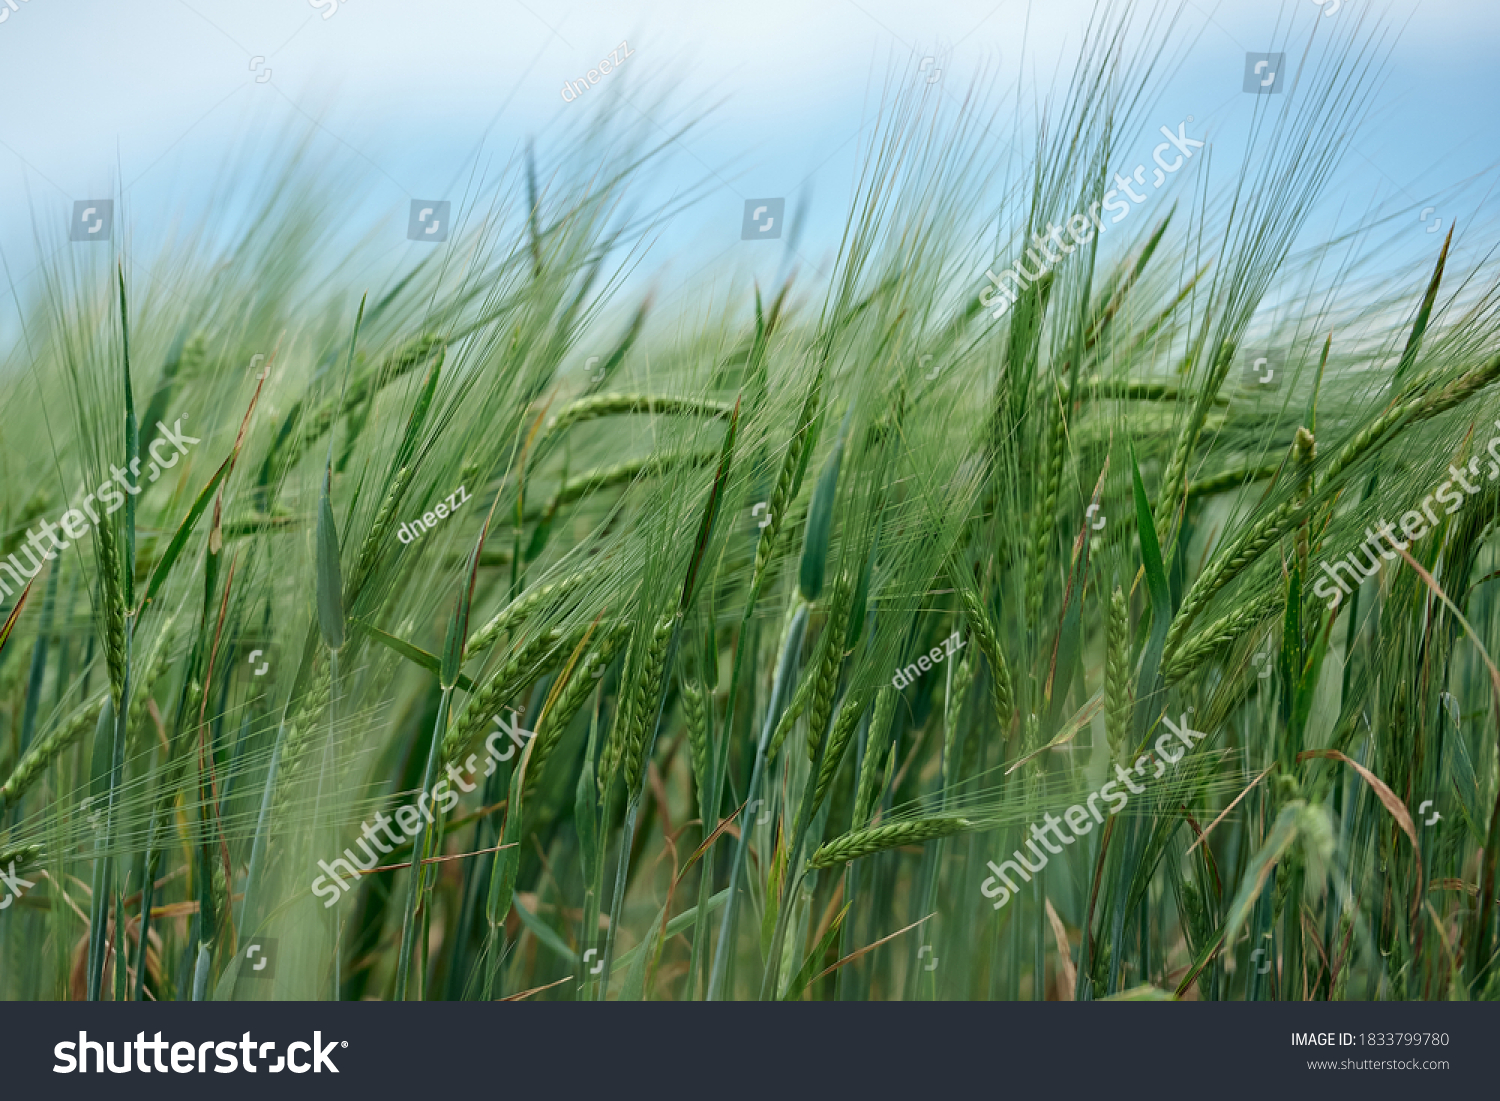 Field of fresh green barley cereals.Ears of green malting barley in the field #1833799780